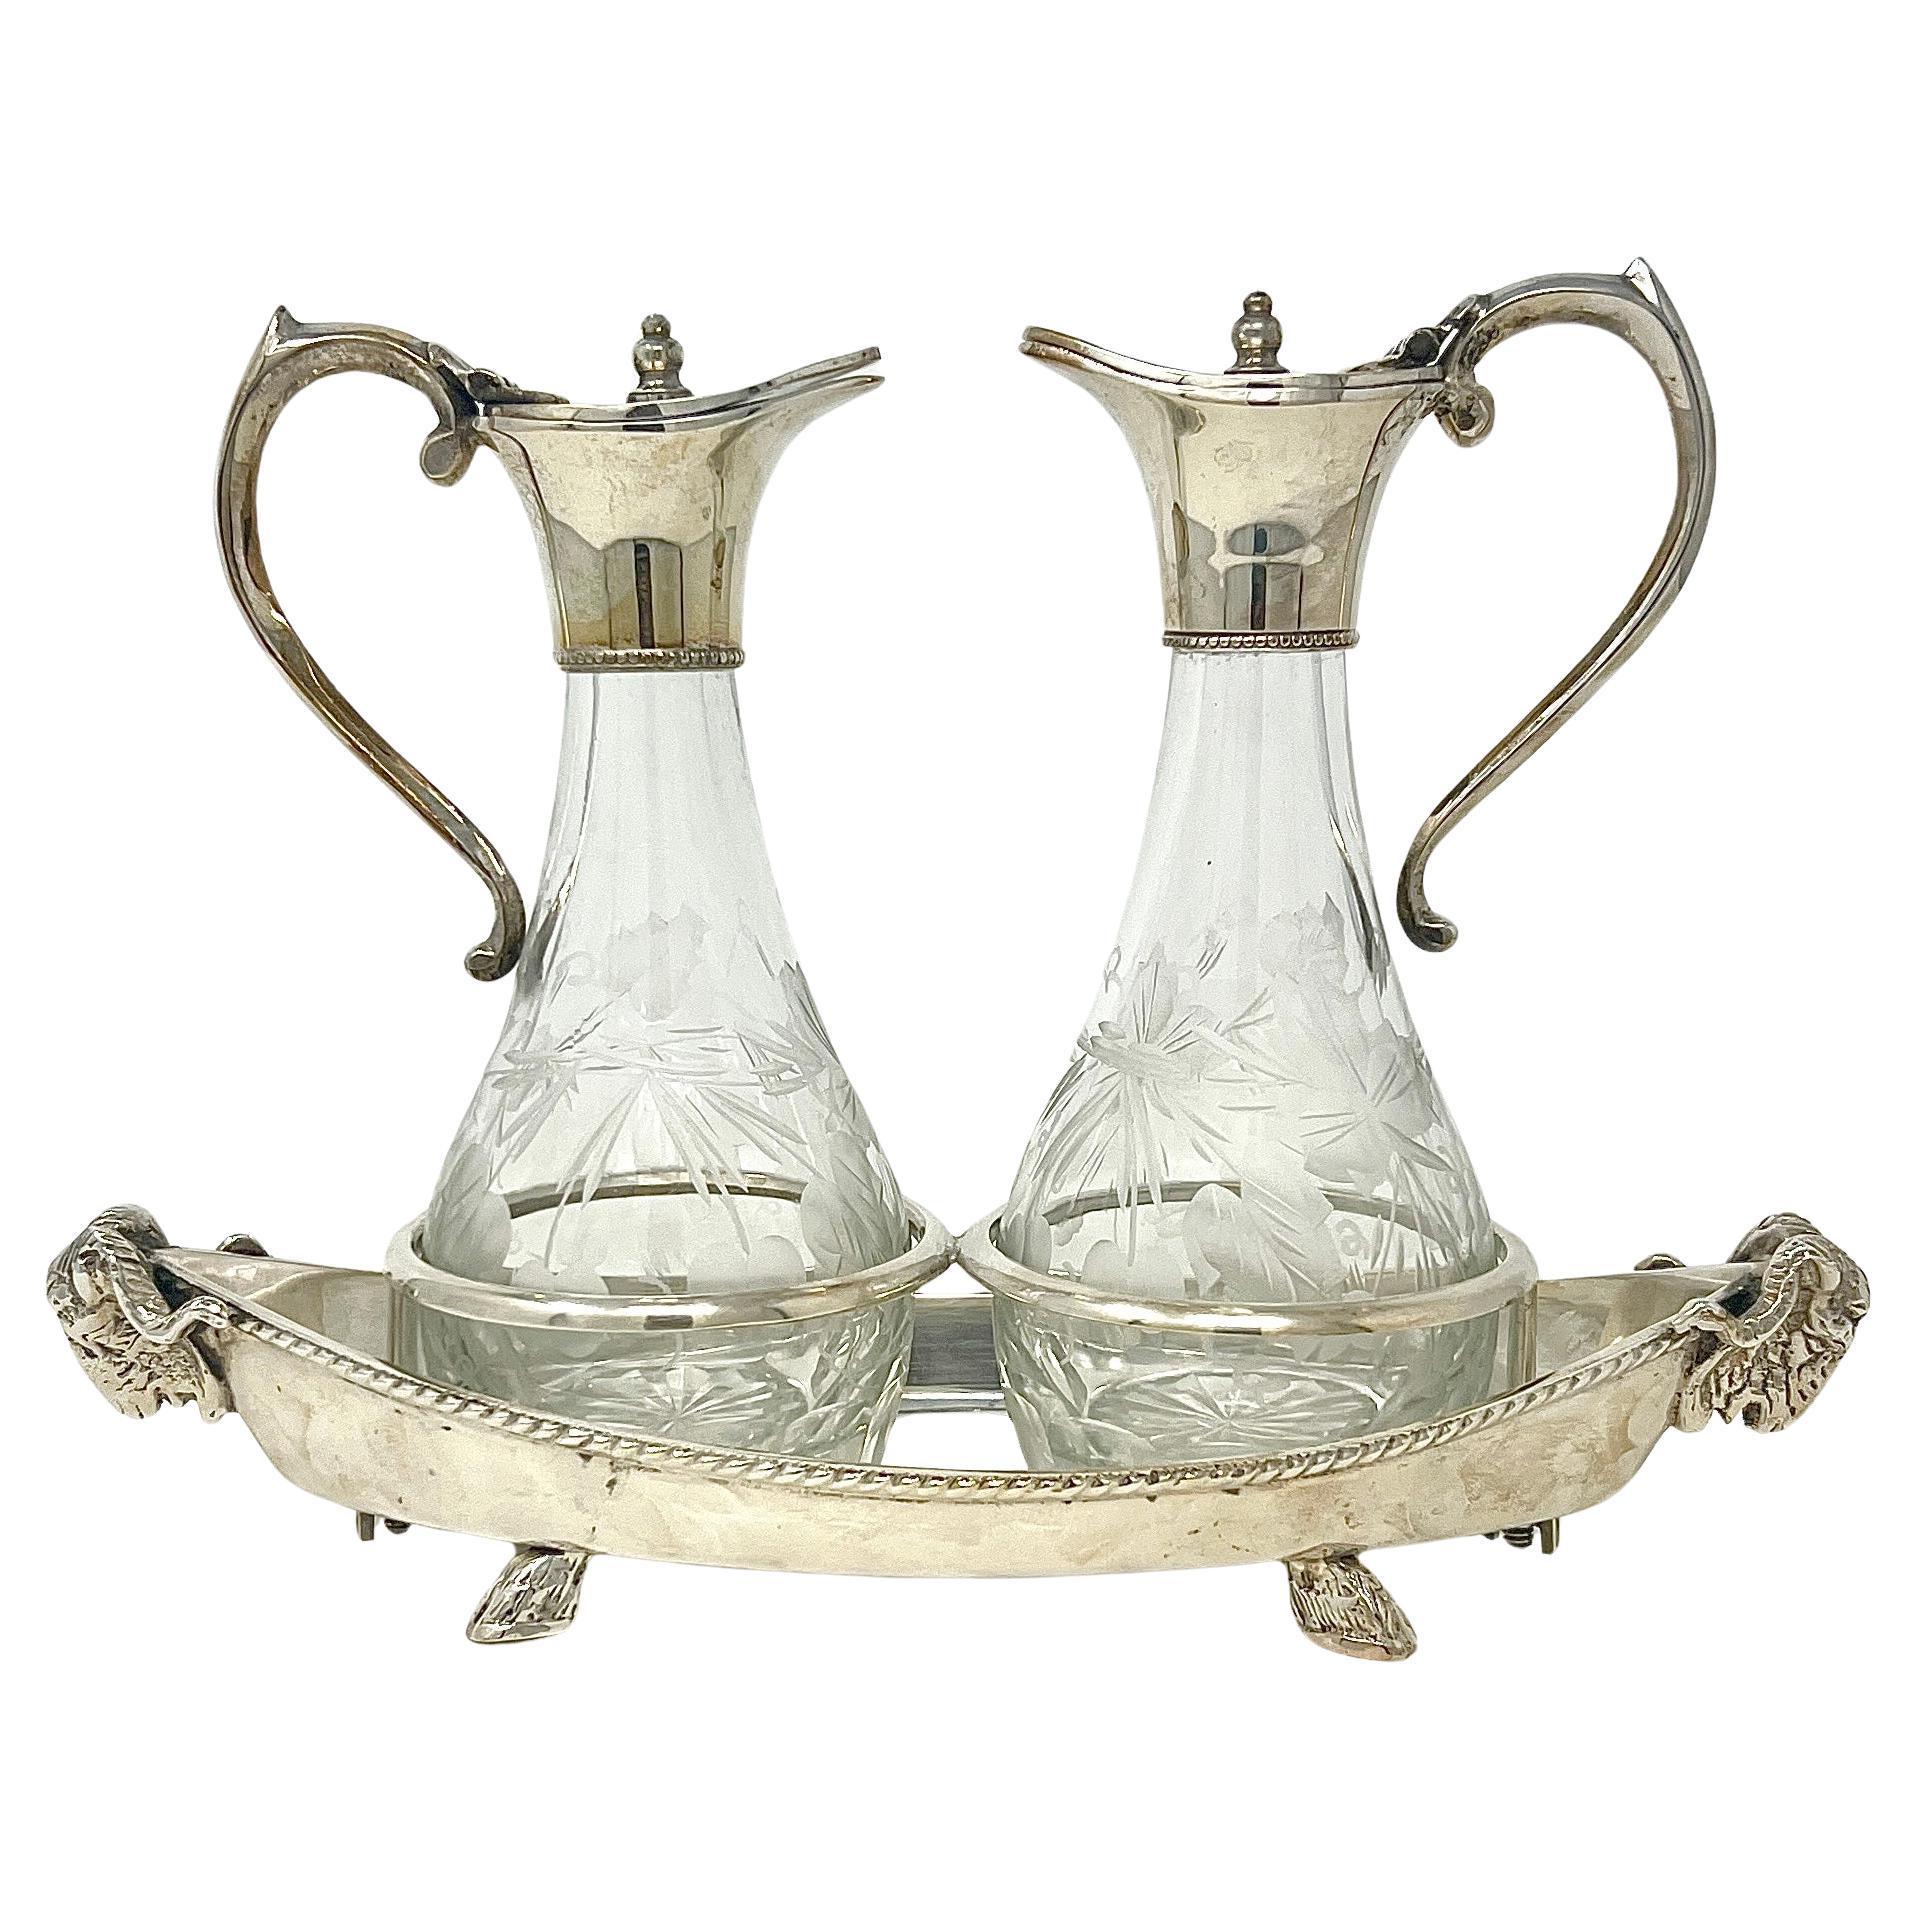 Antique English Silver Plate & Etched Glass Oil & Vinegar Cruet Set, Circa 1870s